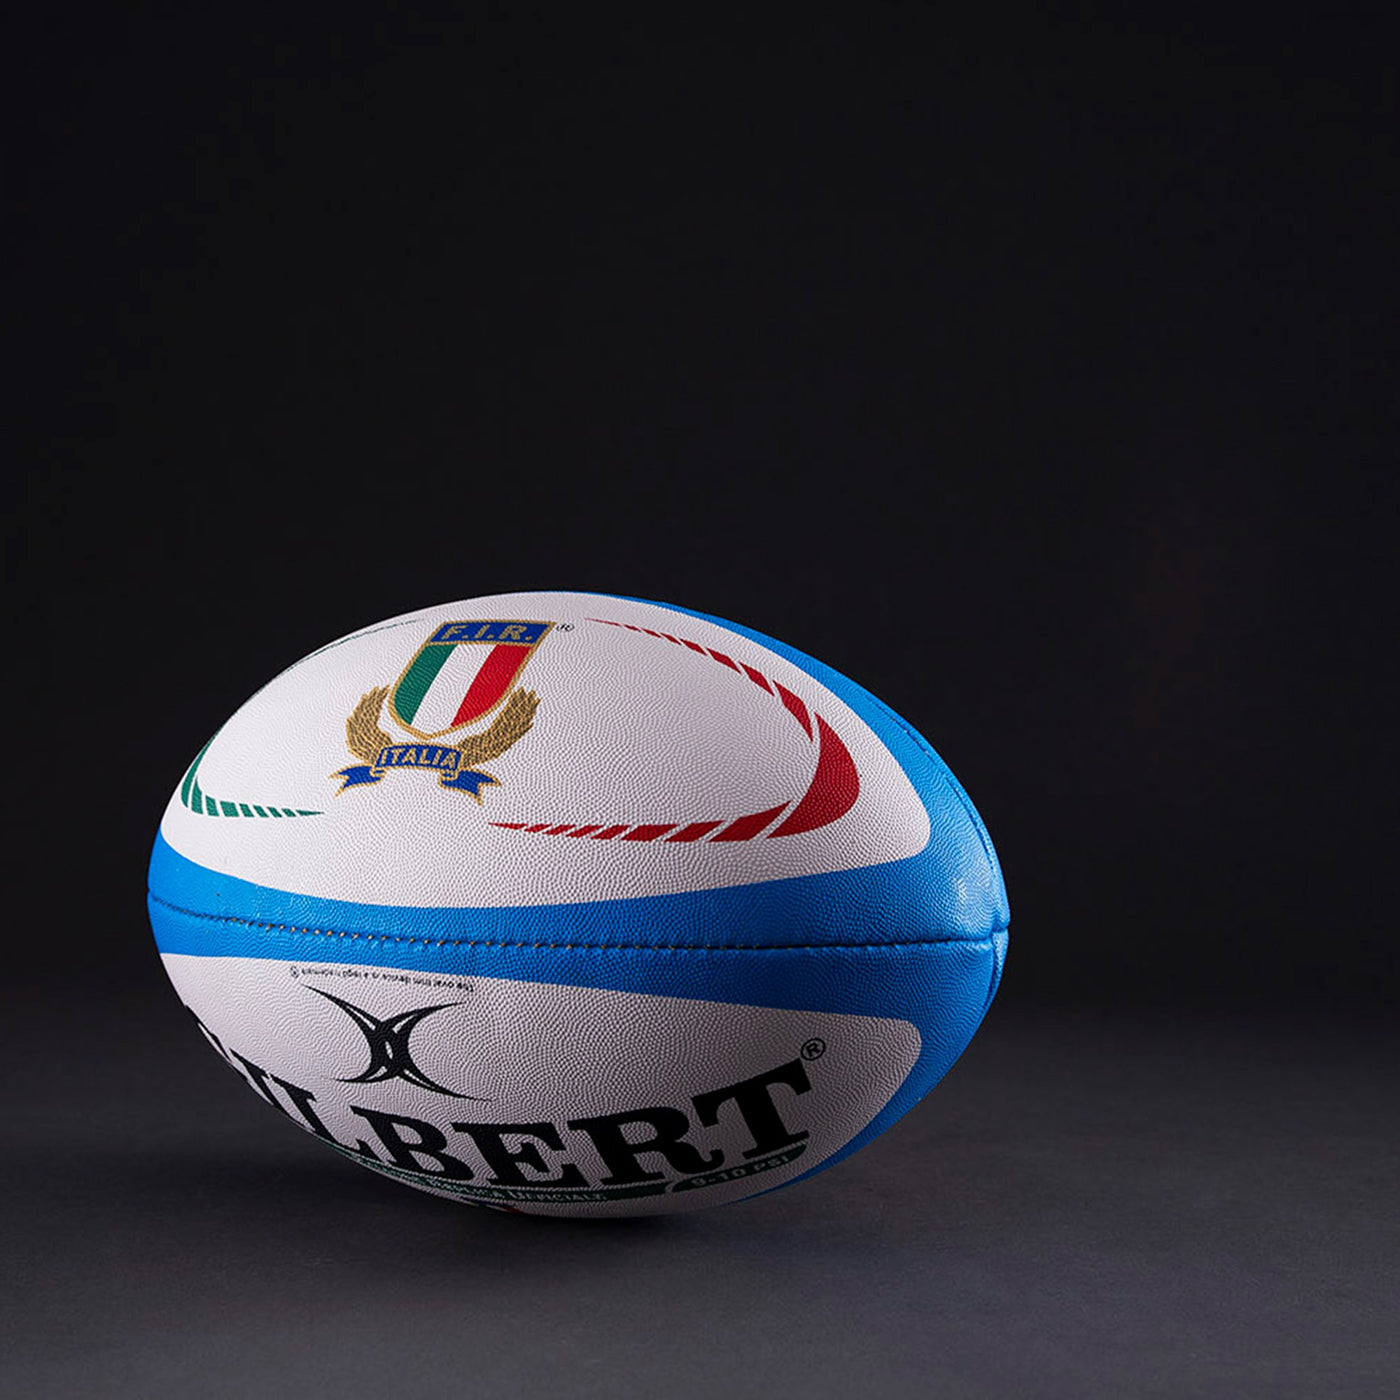 Réplique du ballon de rugby Italie